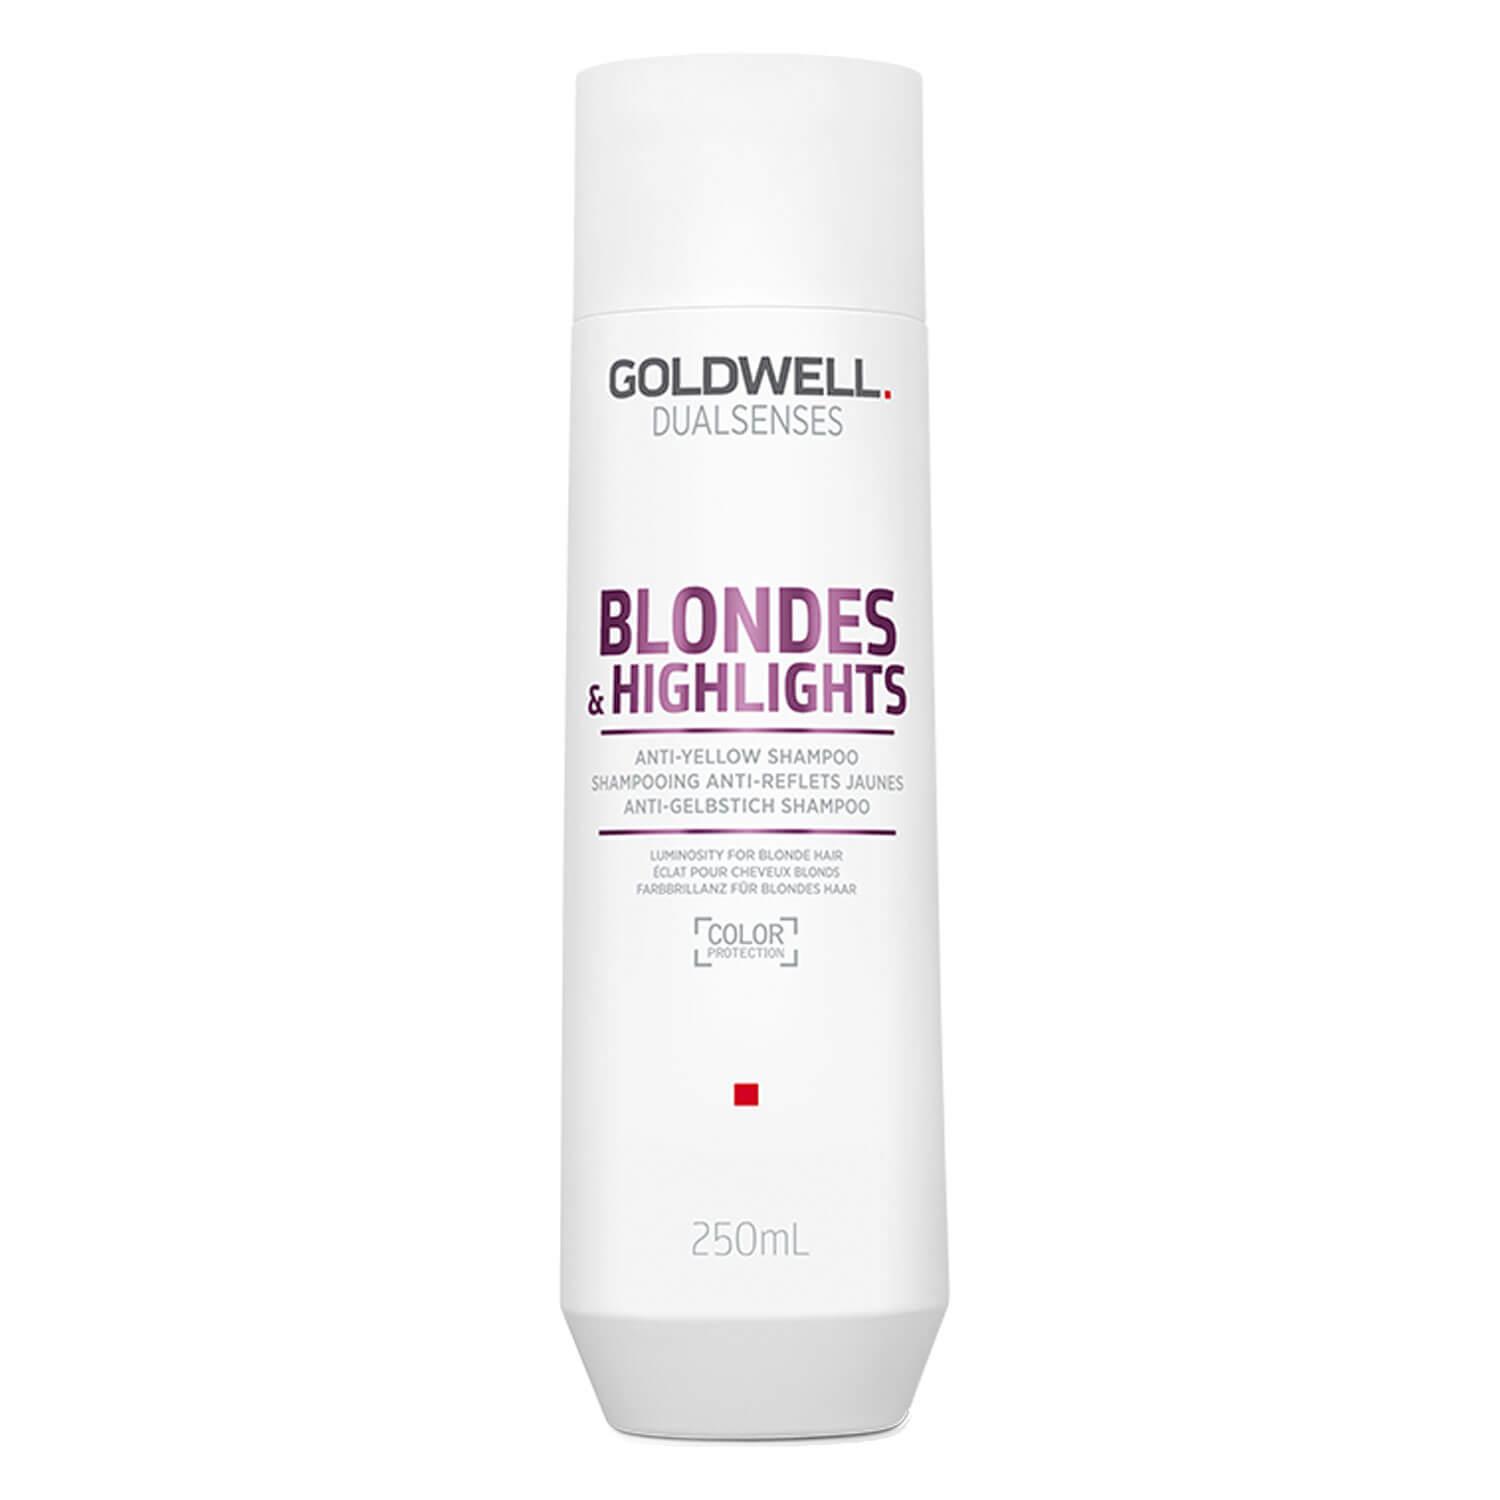 Dualsenses Blondes & Highlights - Anti-Yellow Shampoo